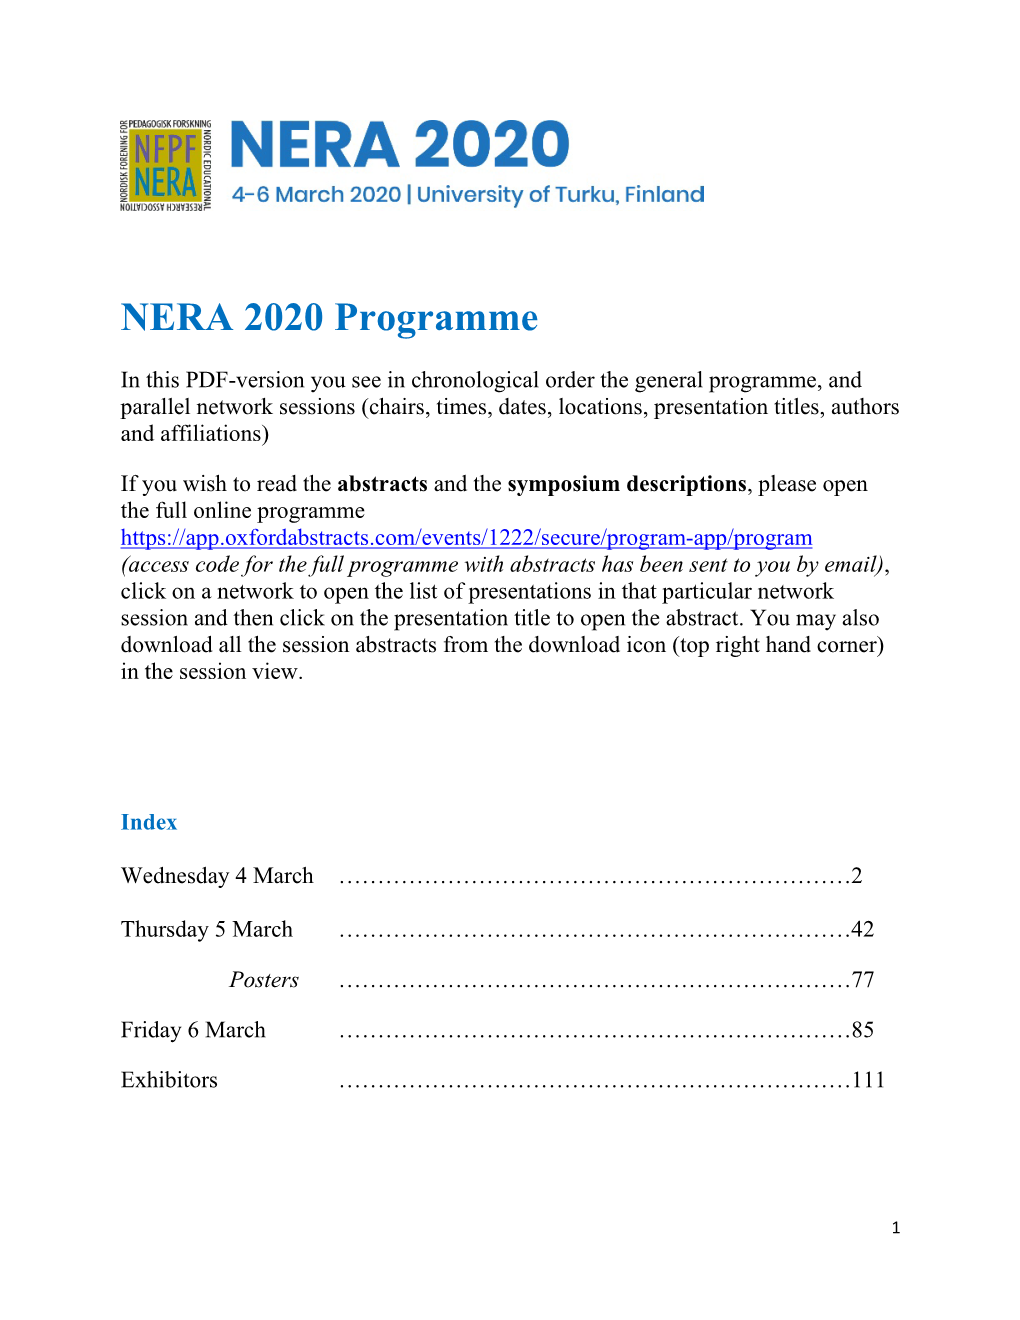 NERA 2020 Programme